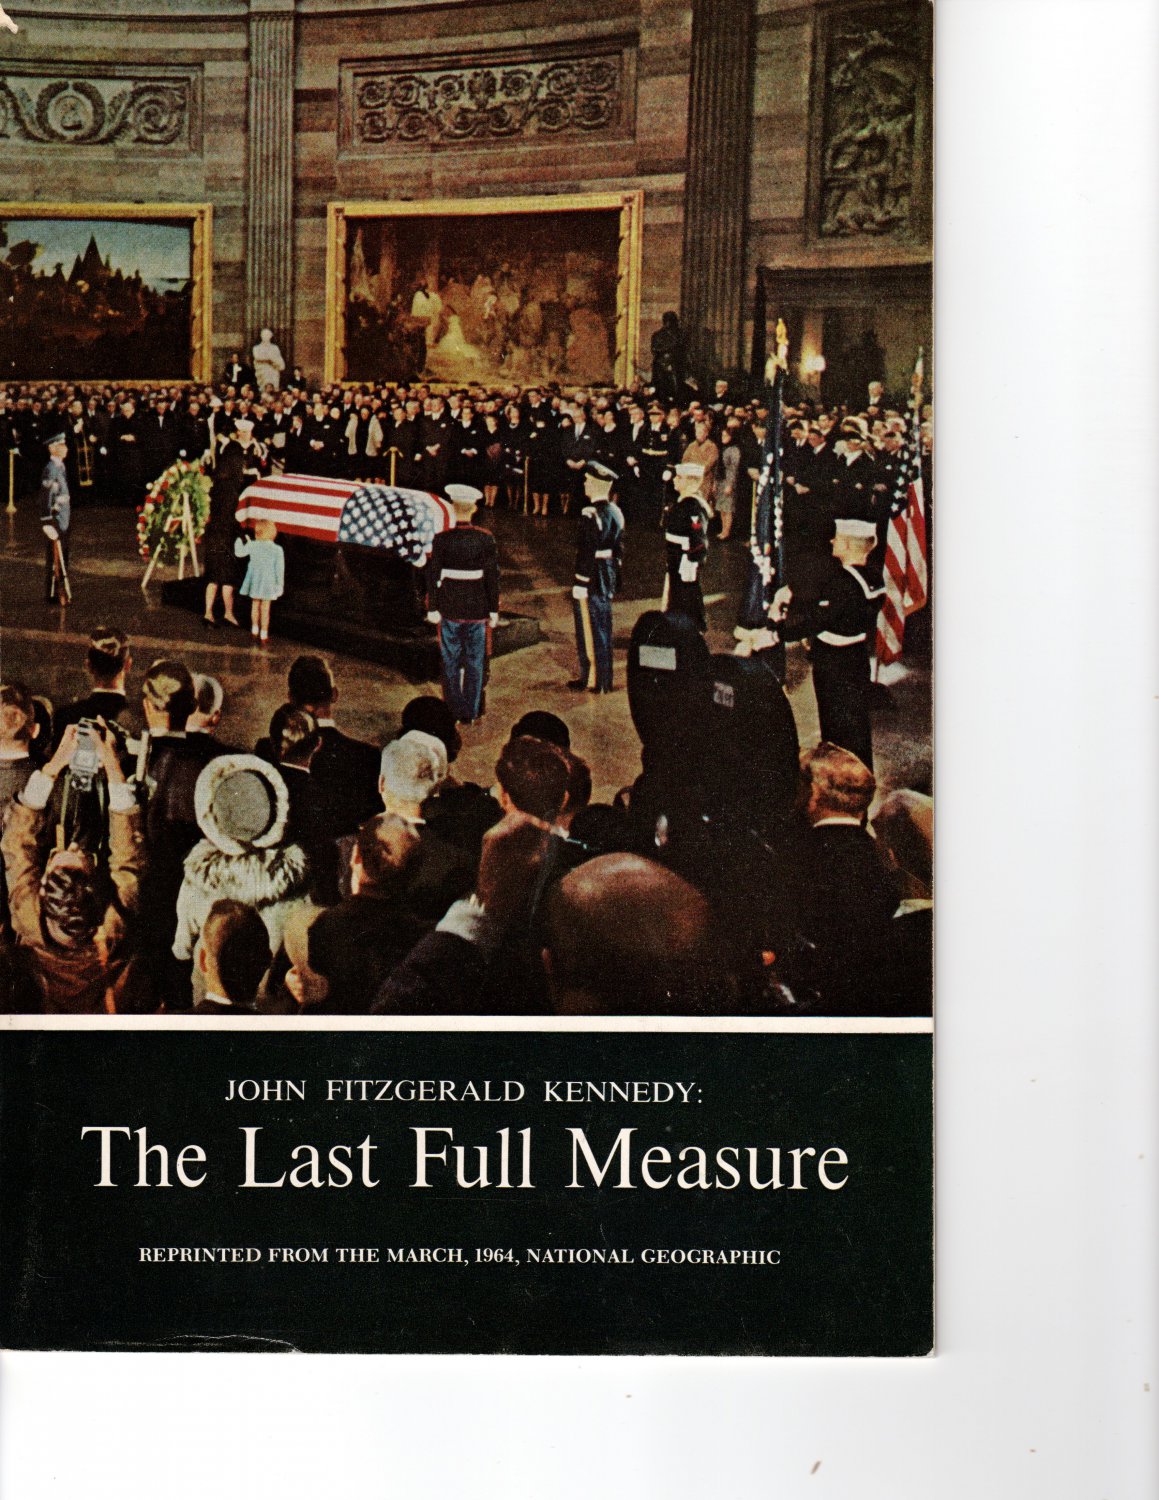 JFK:The Last Full Measure, National Geographic reprint 19641159 x 1500